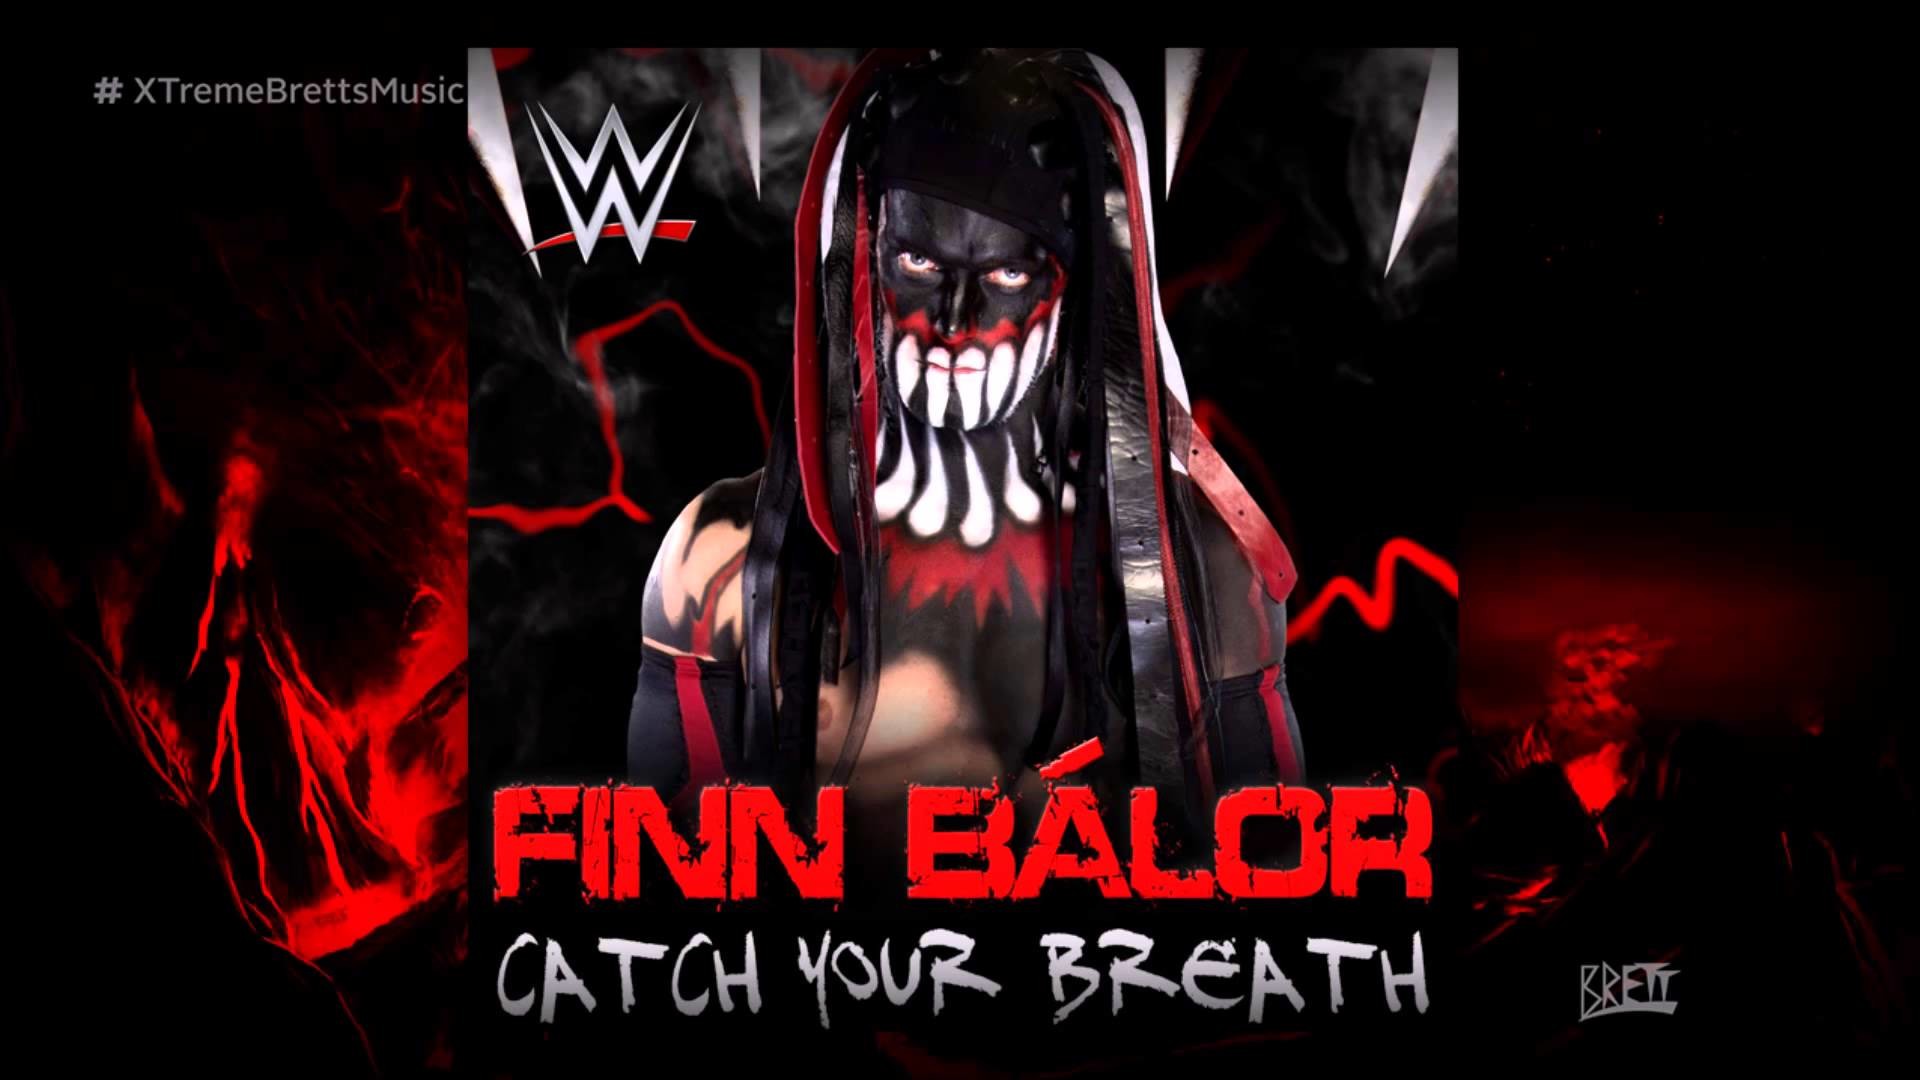 1920x1080 WWE NXT: "Catch Your Breath" [iTunes Release] by CFO$ â»